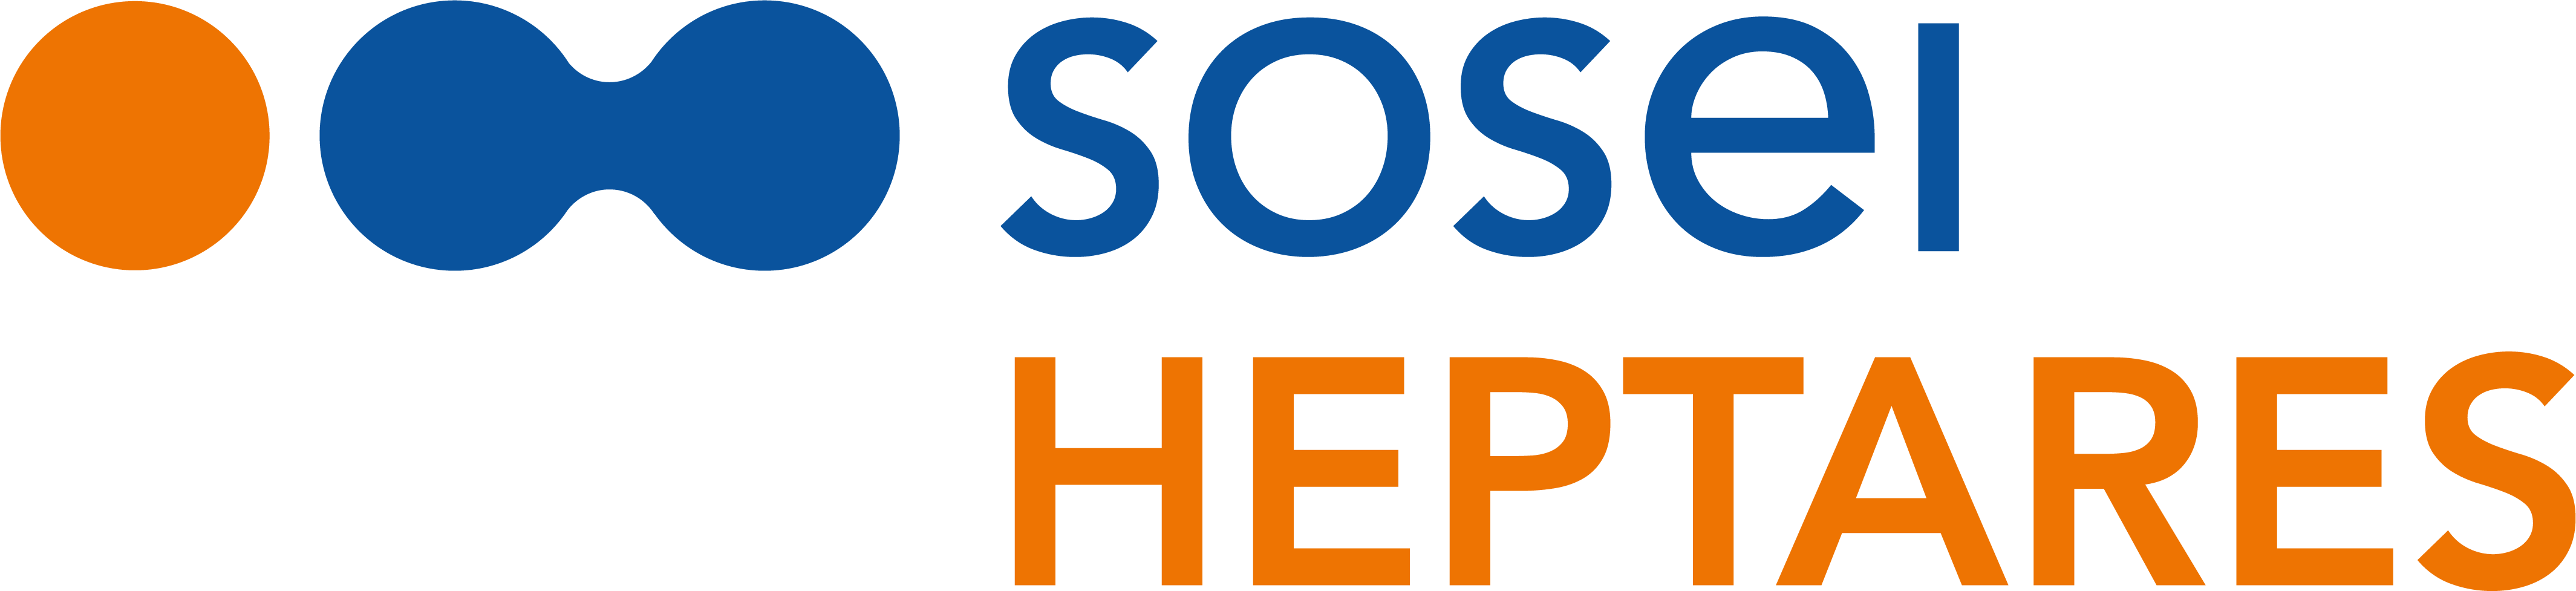 Sosei Heptares logo